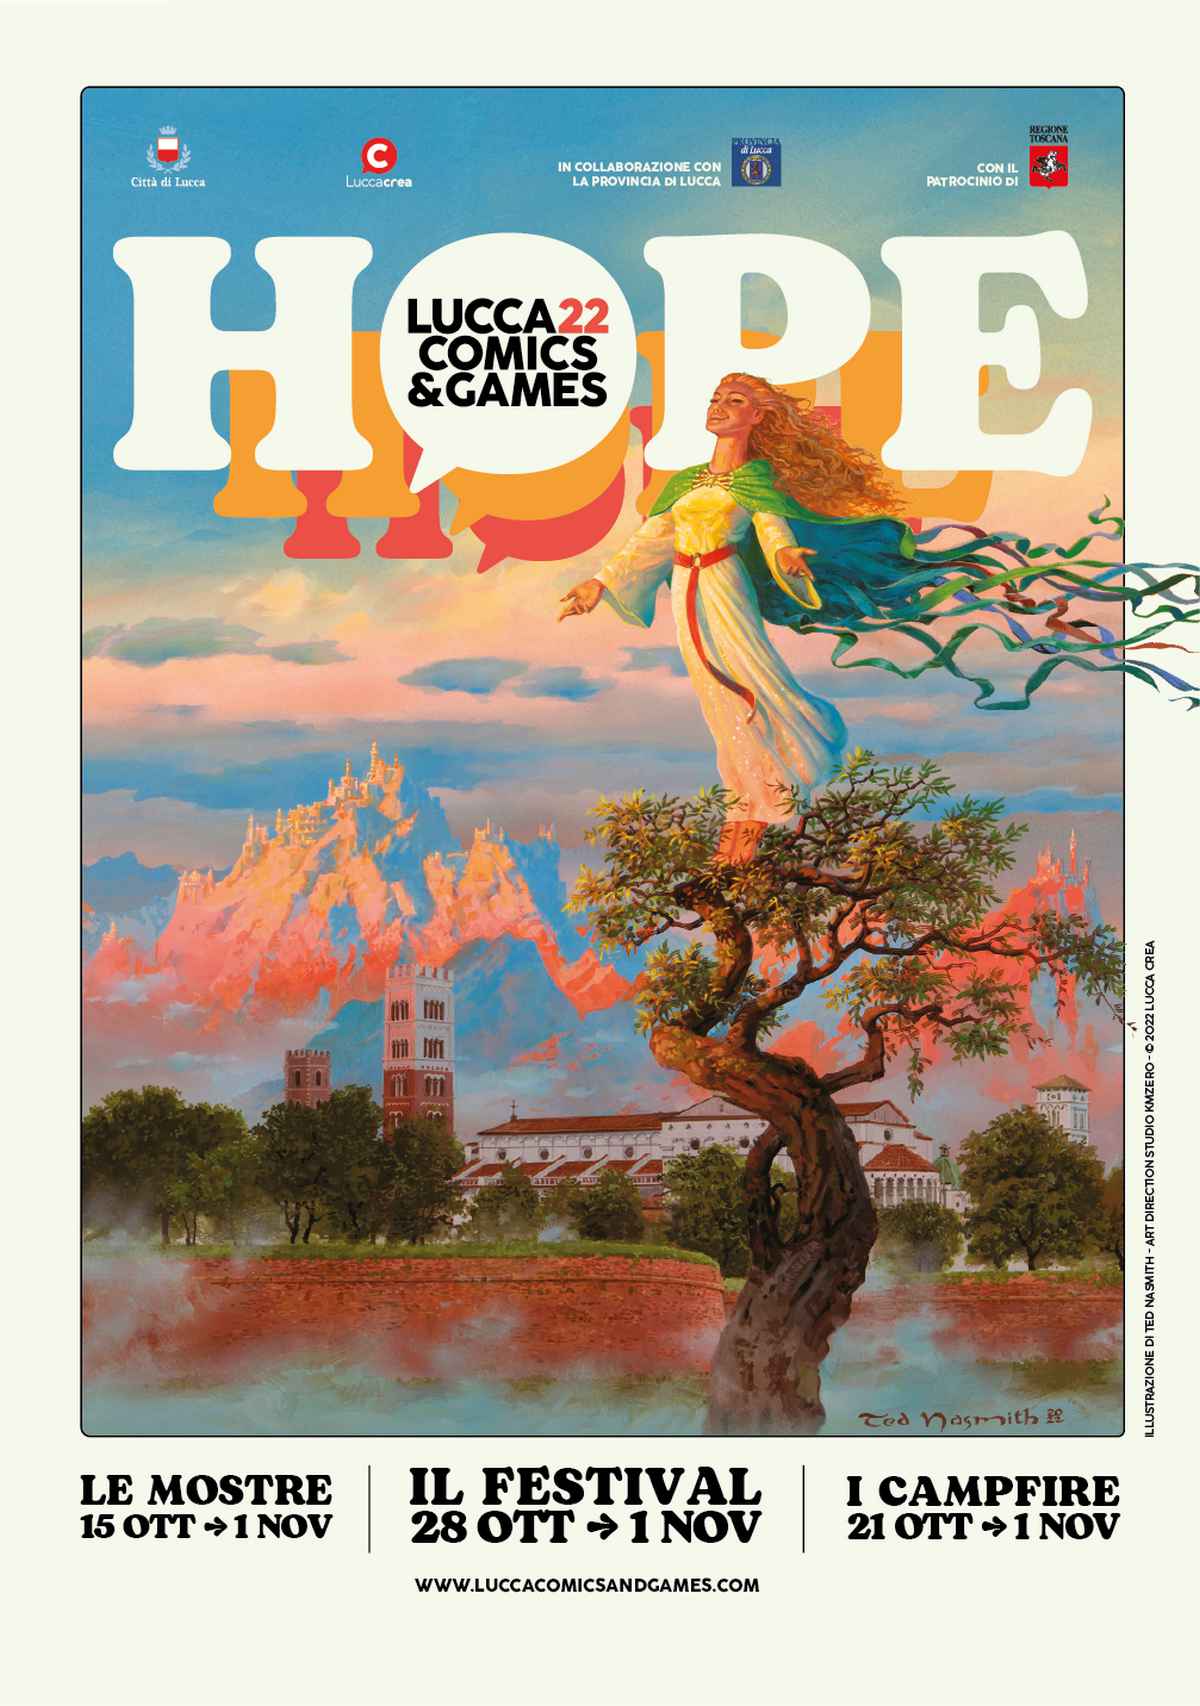 Lucca Comics & Games 2022: Hope!